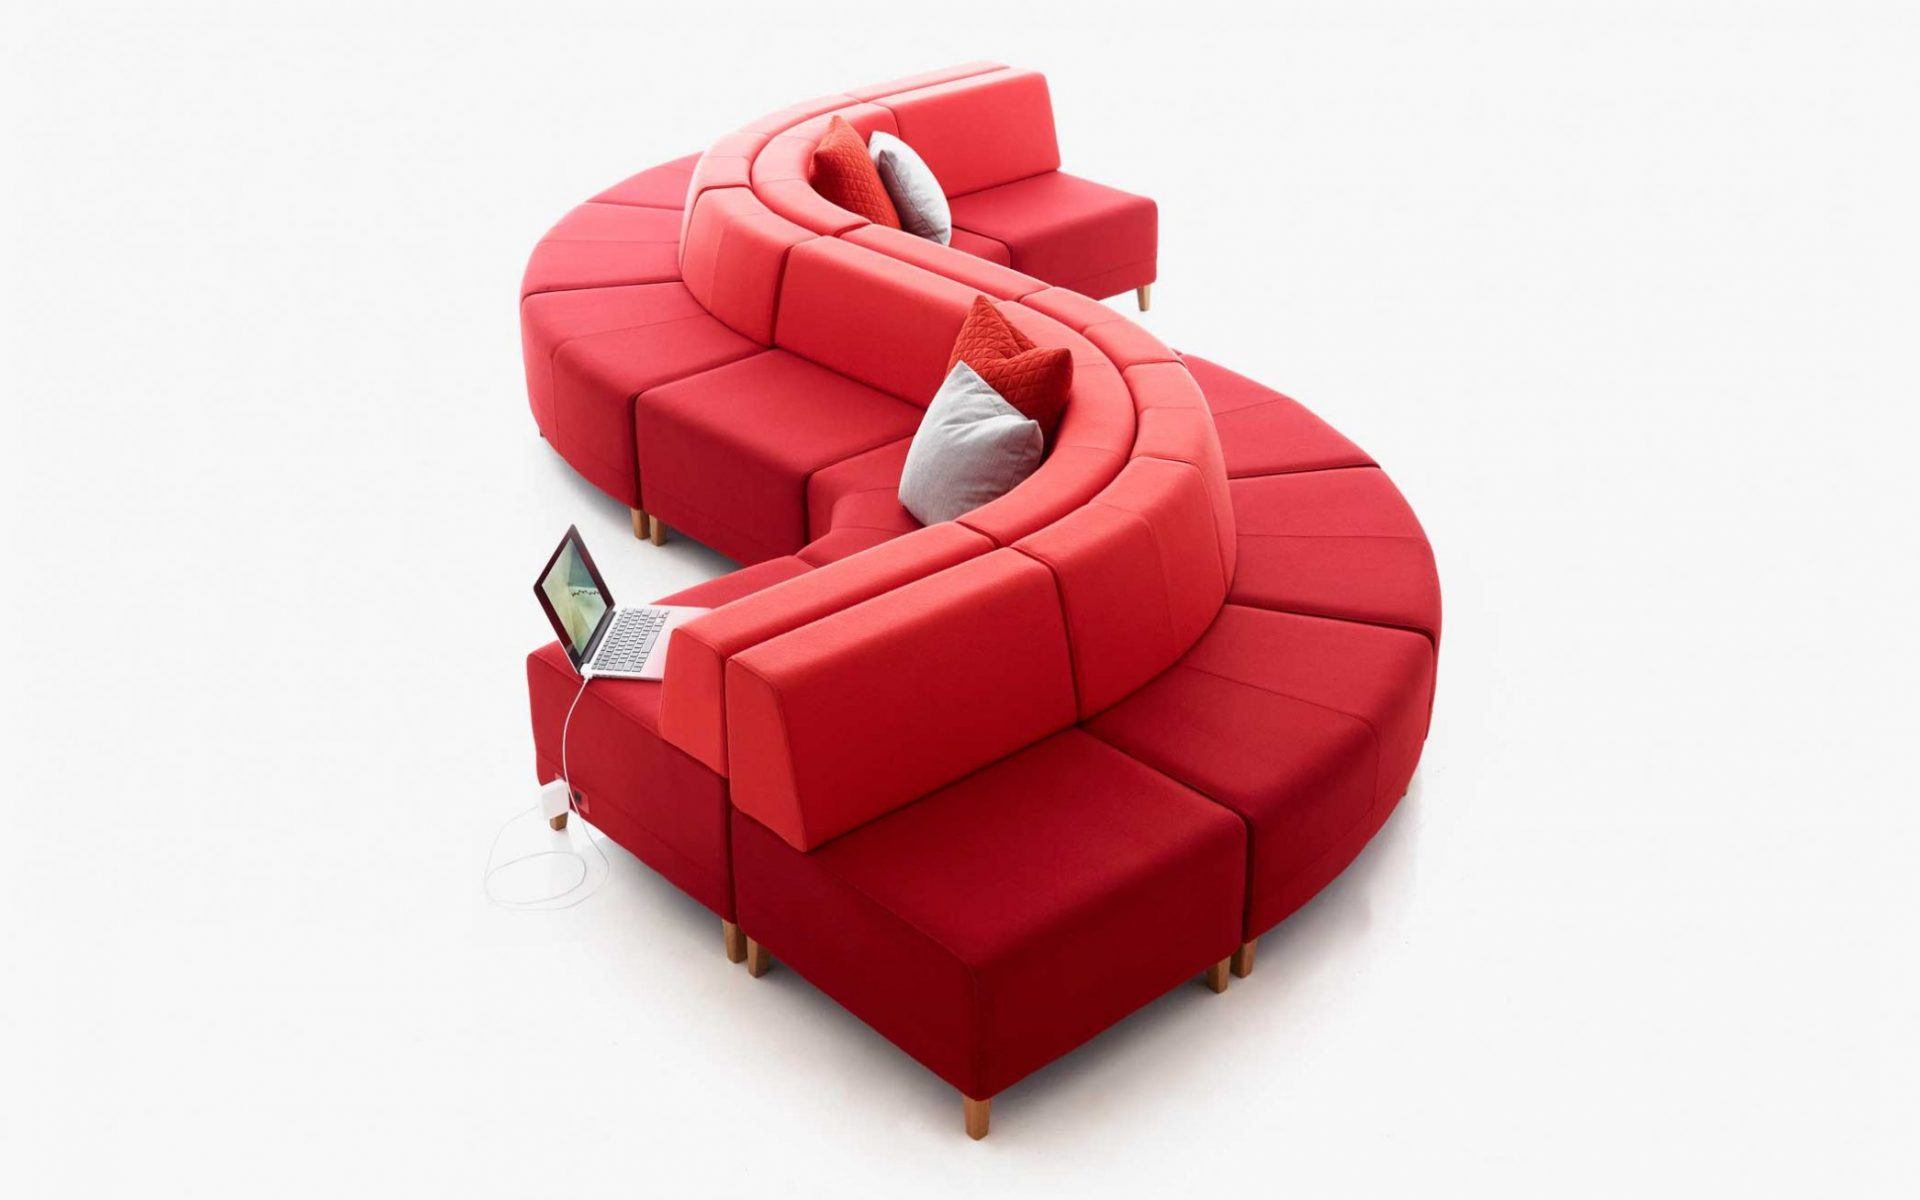 Stylex Share Modular Lounge Seating